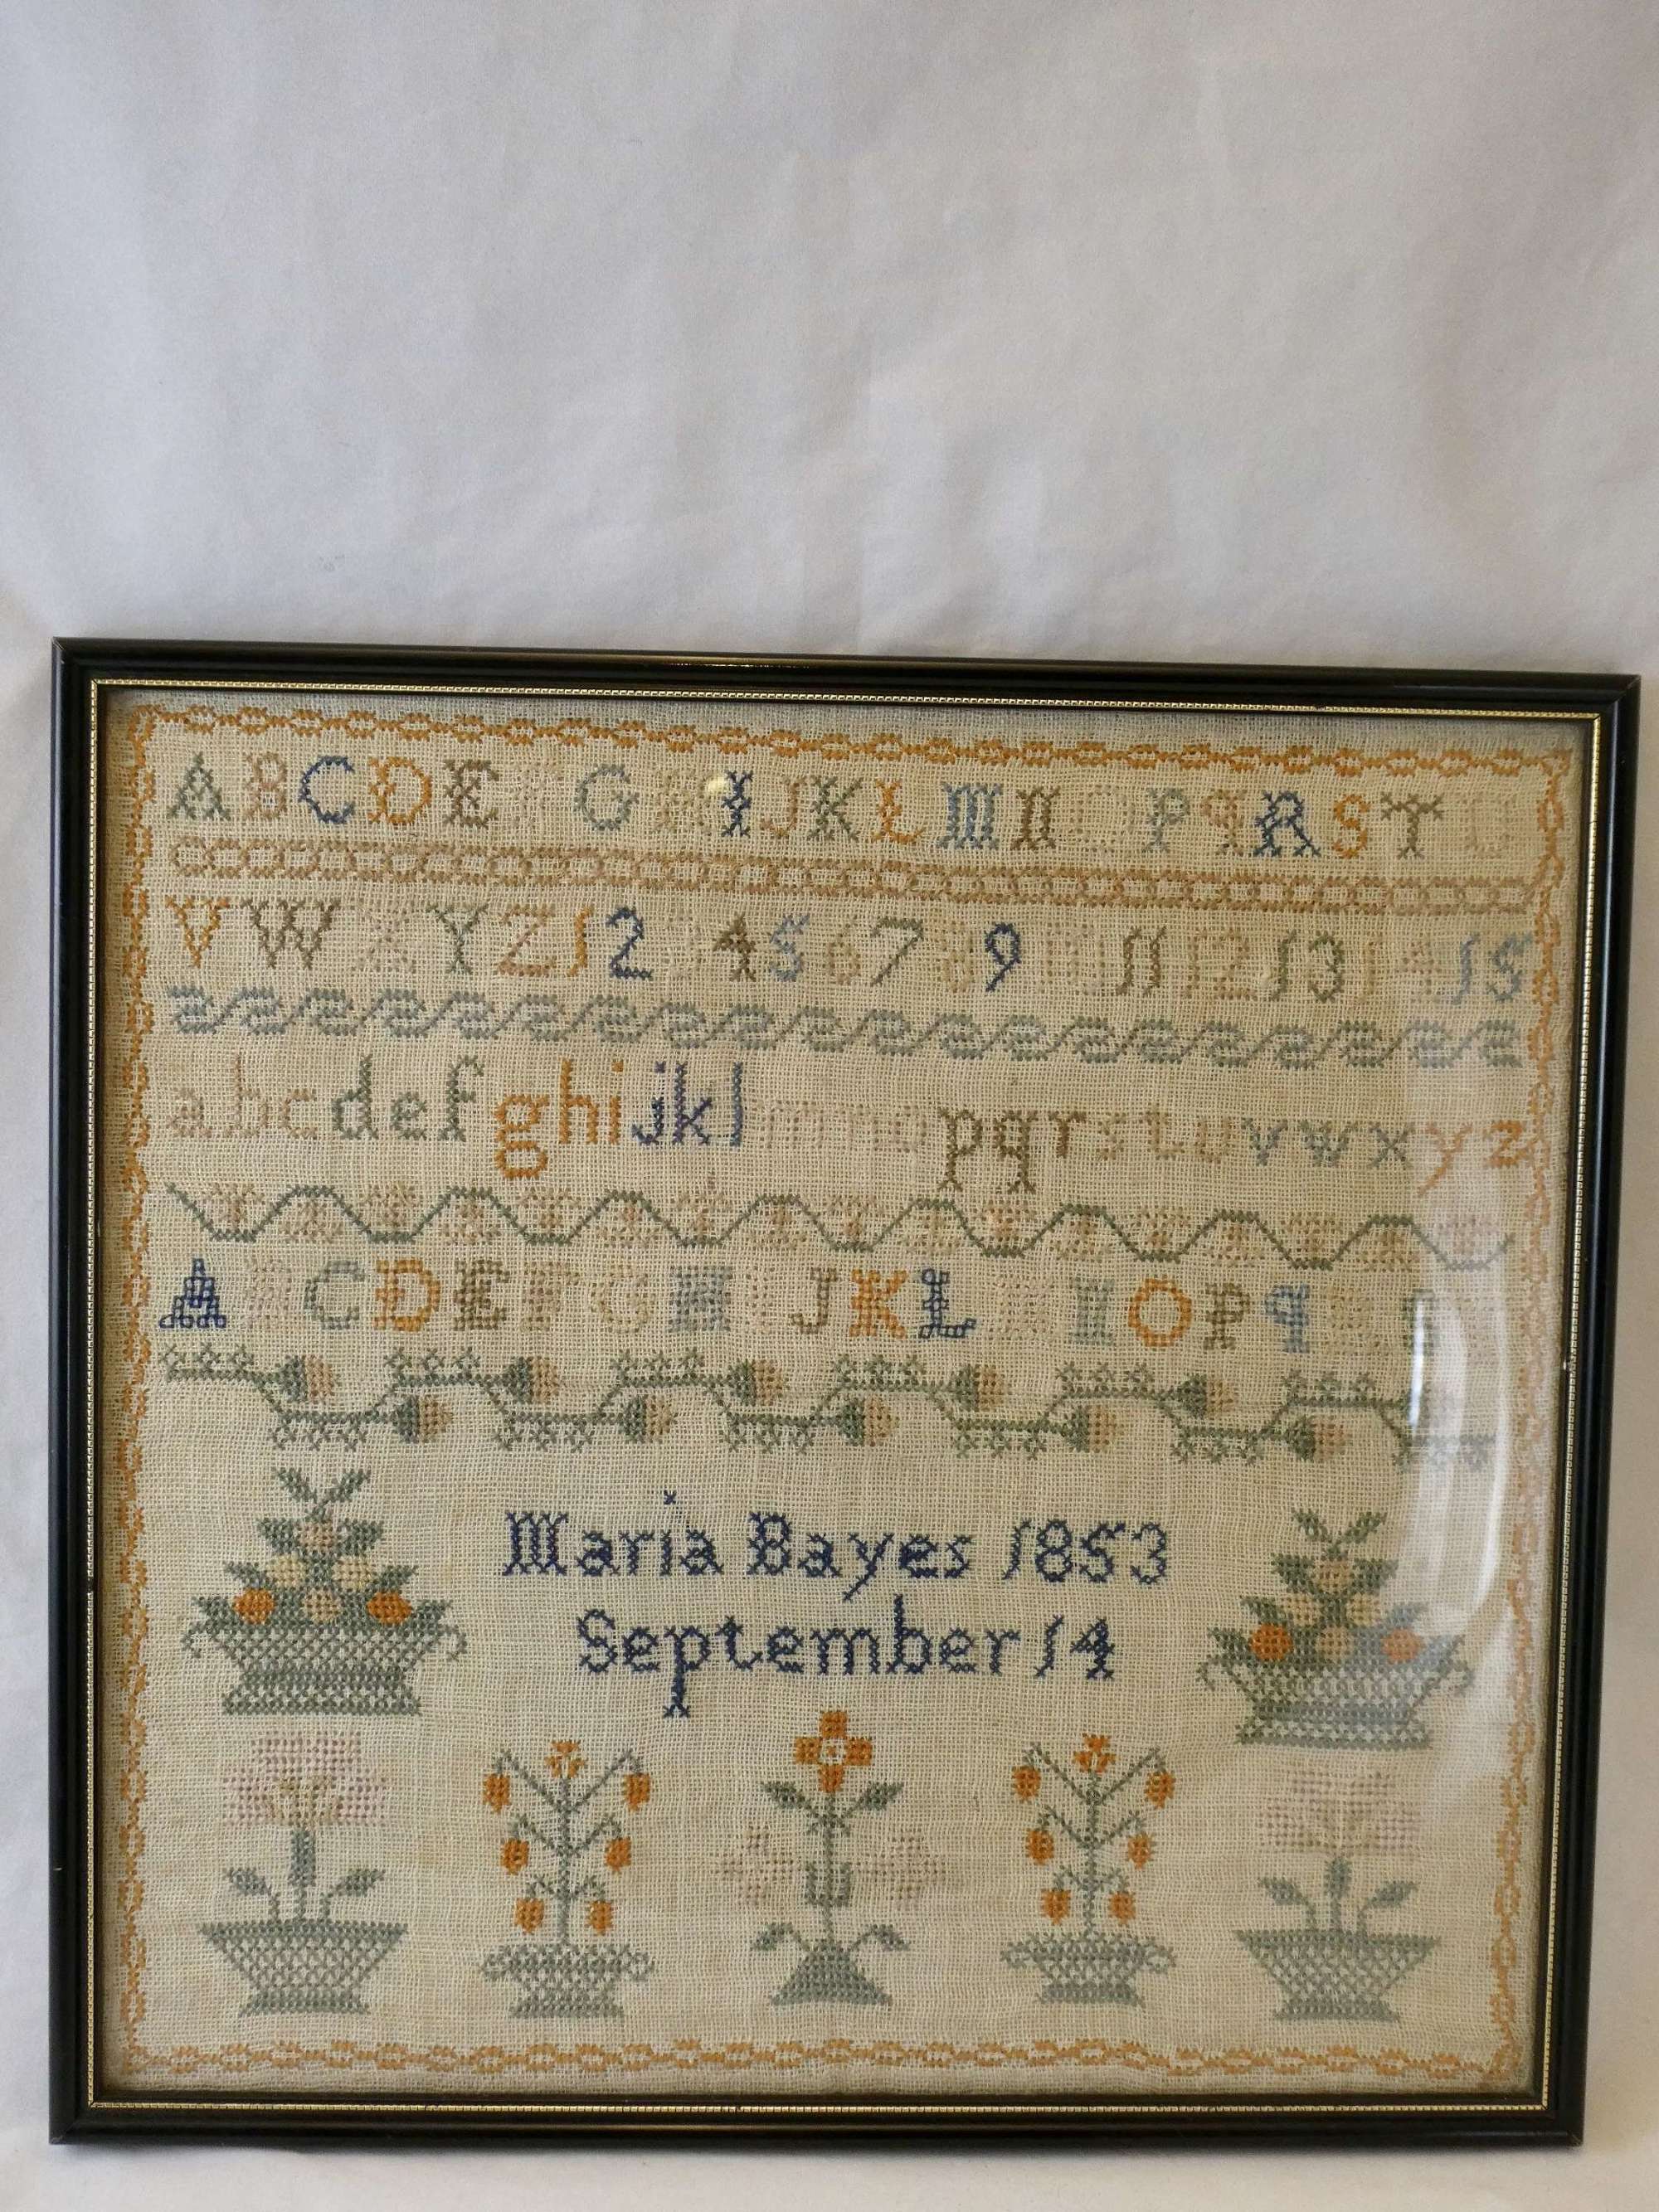 Sampler, Maria Bayes, 1853